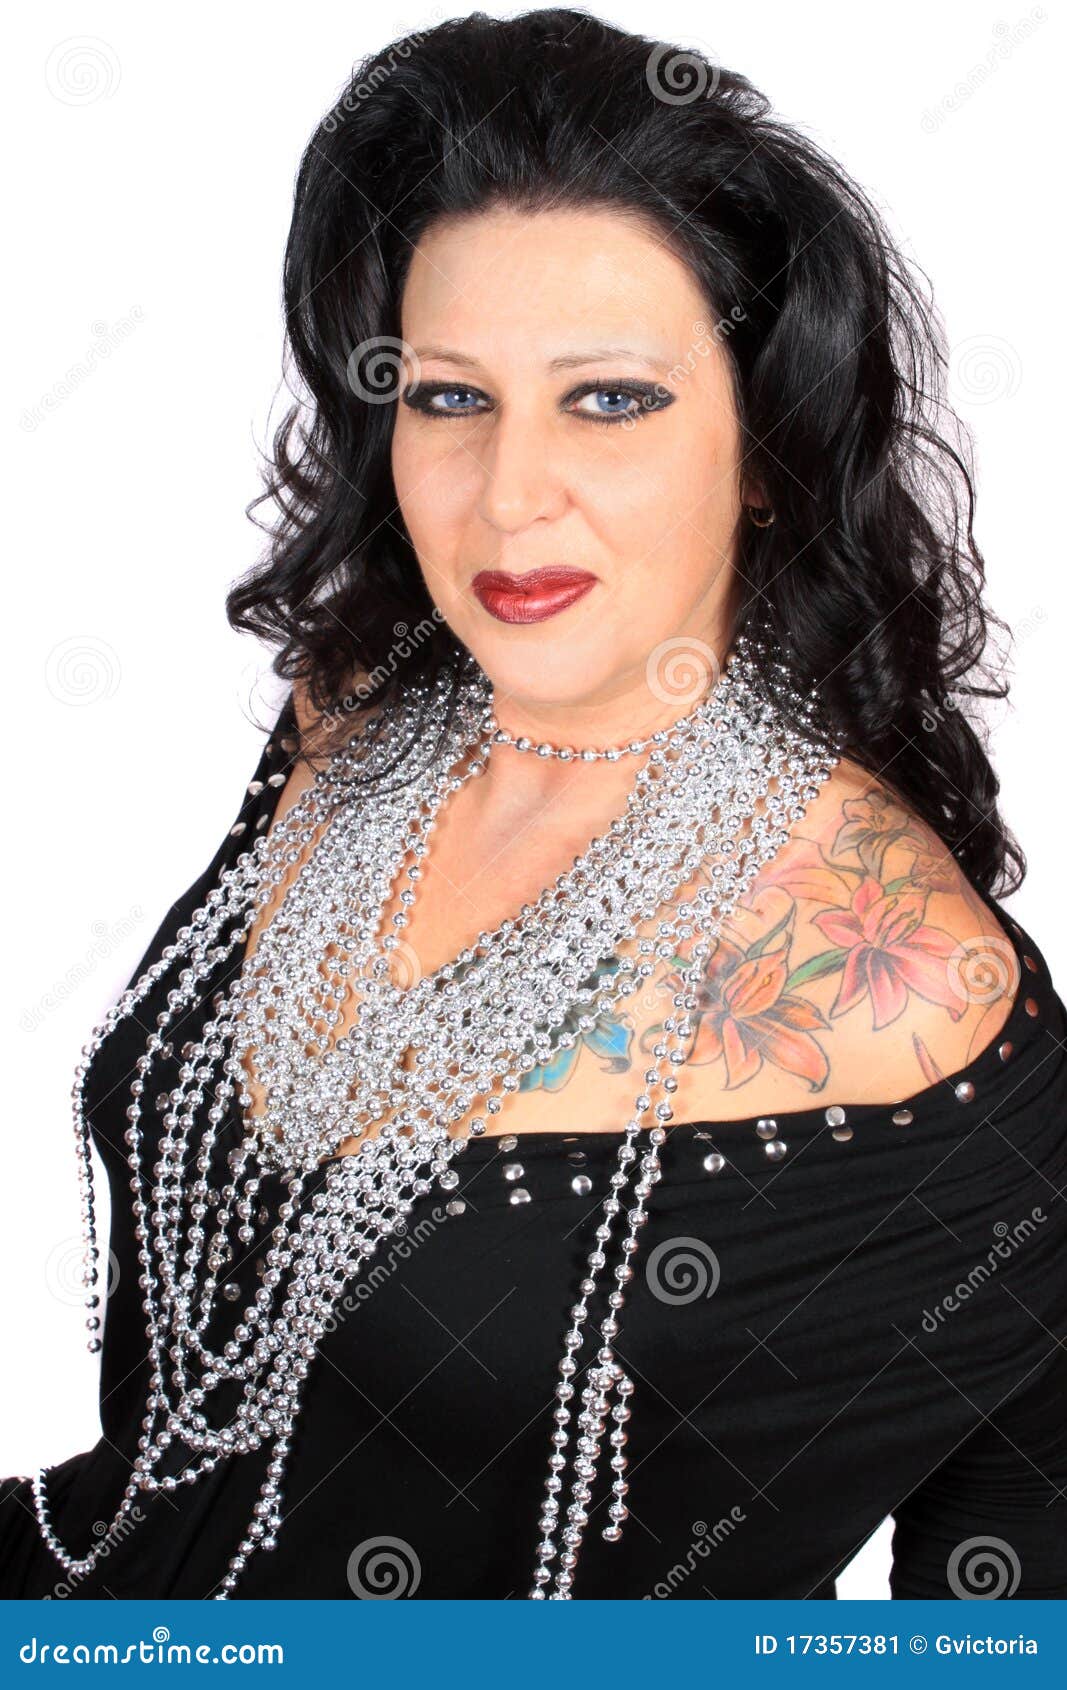 Glamorous woman stock image. Image of fashion, hair, curly - 17357381